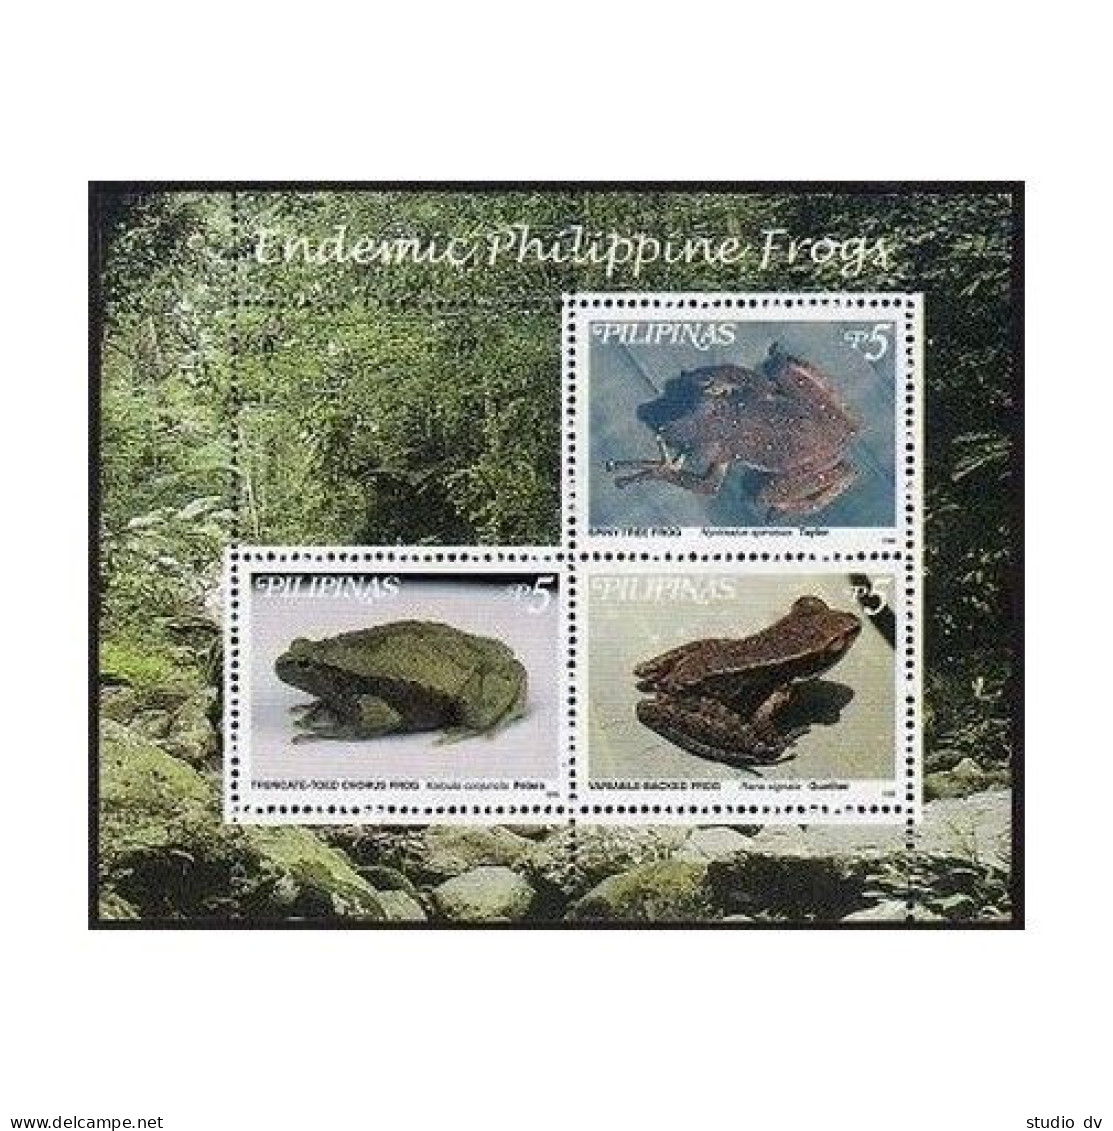 Philippines 2612 Ad Block, 2613 Ac Sheet, MNH. Frogs, 1999. - Philippinen